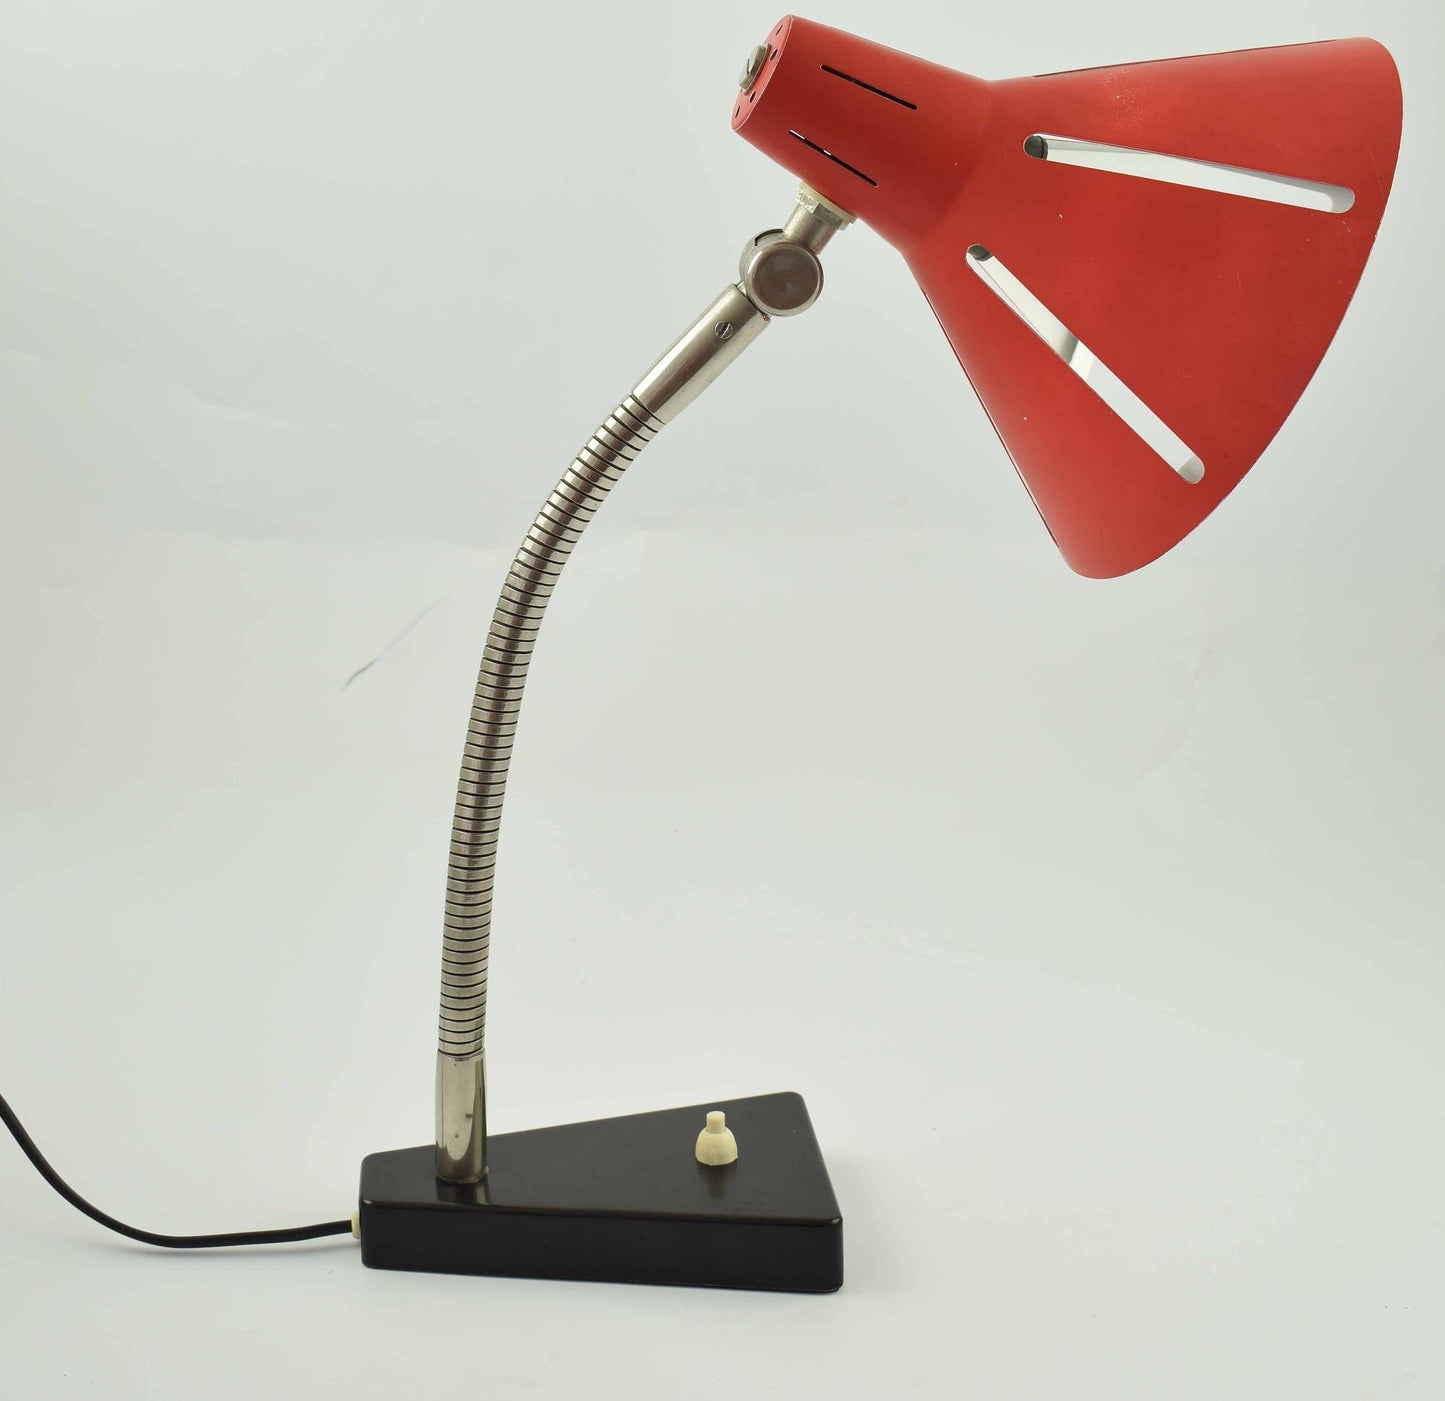 Hala zonneserie, sun series, table lamp absolute great classic dutch design desklamp from hala